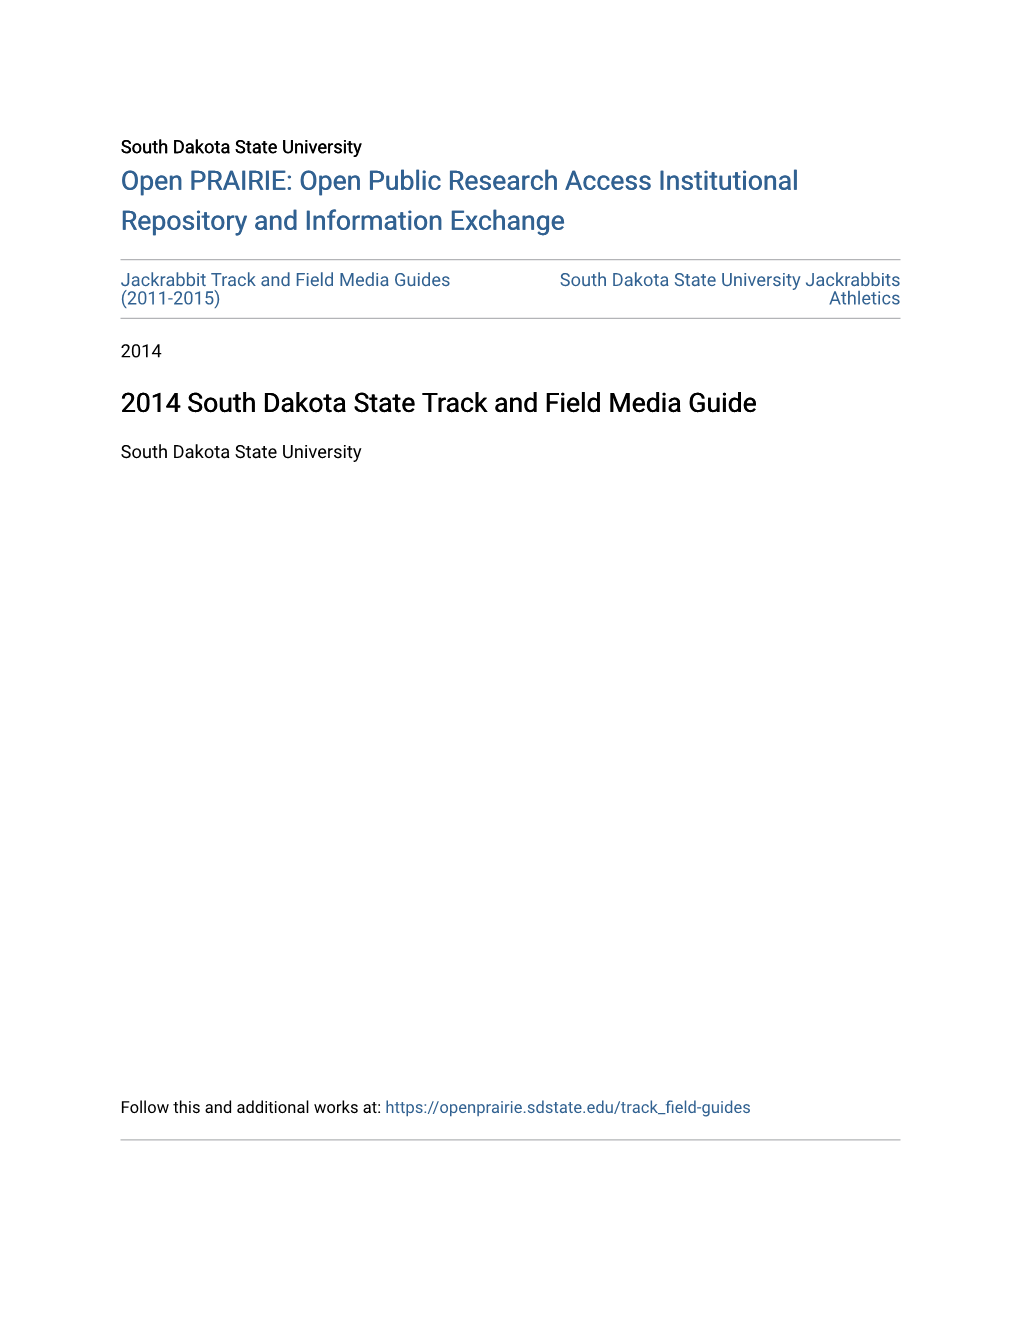 2014 South Dakota State Track and Field Media Guide